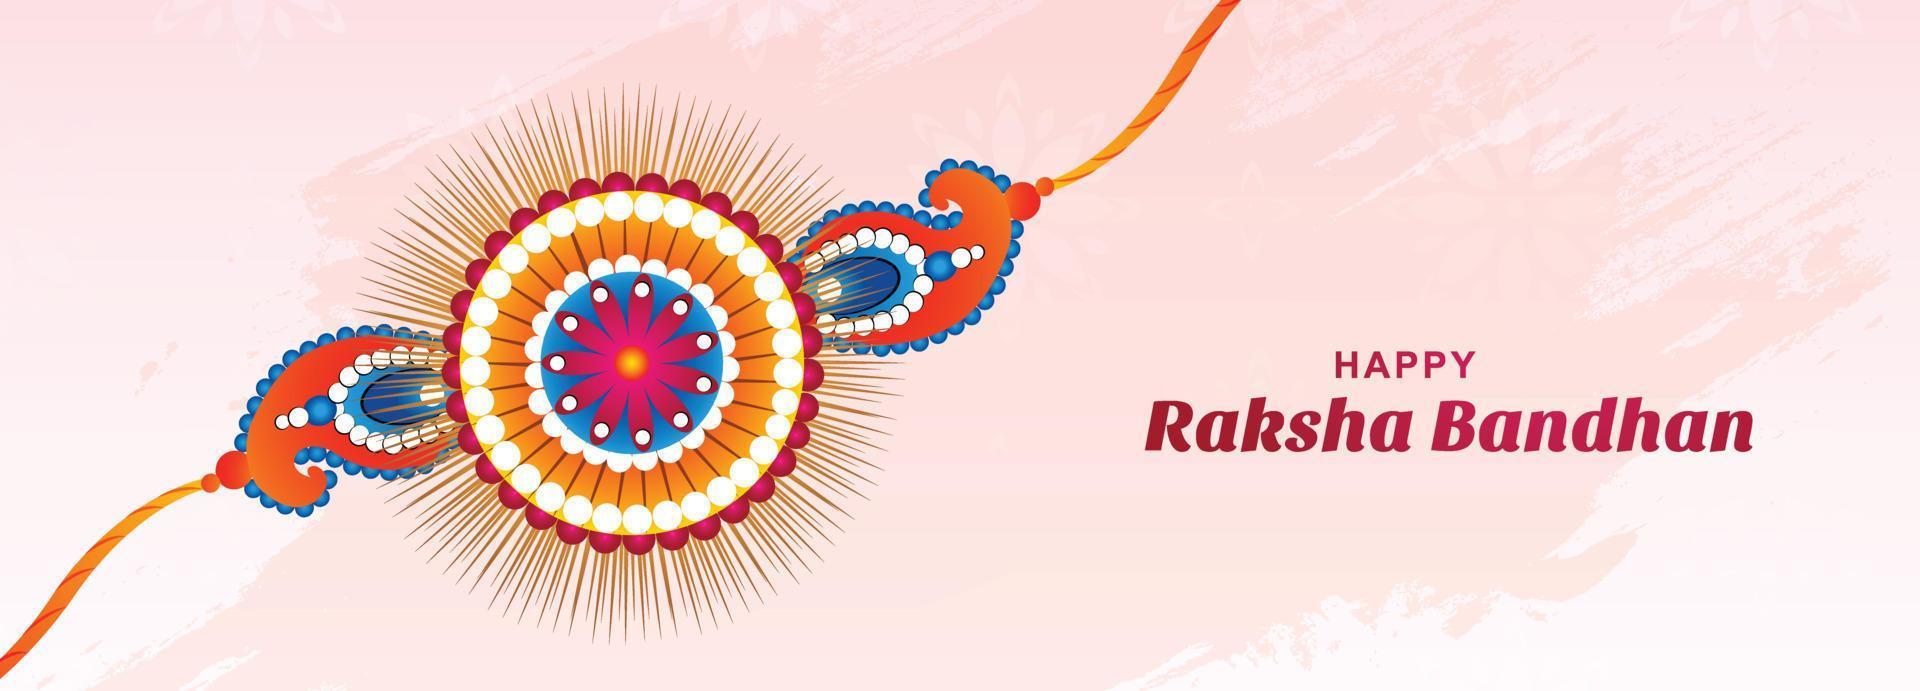 Raksha bandhan festival card with rakhi banner design vector